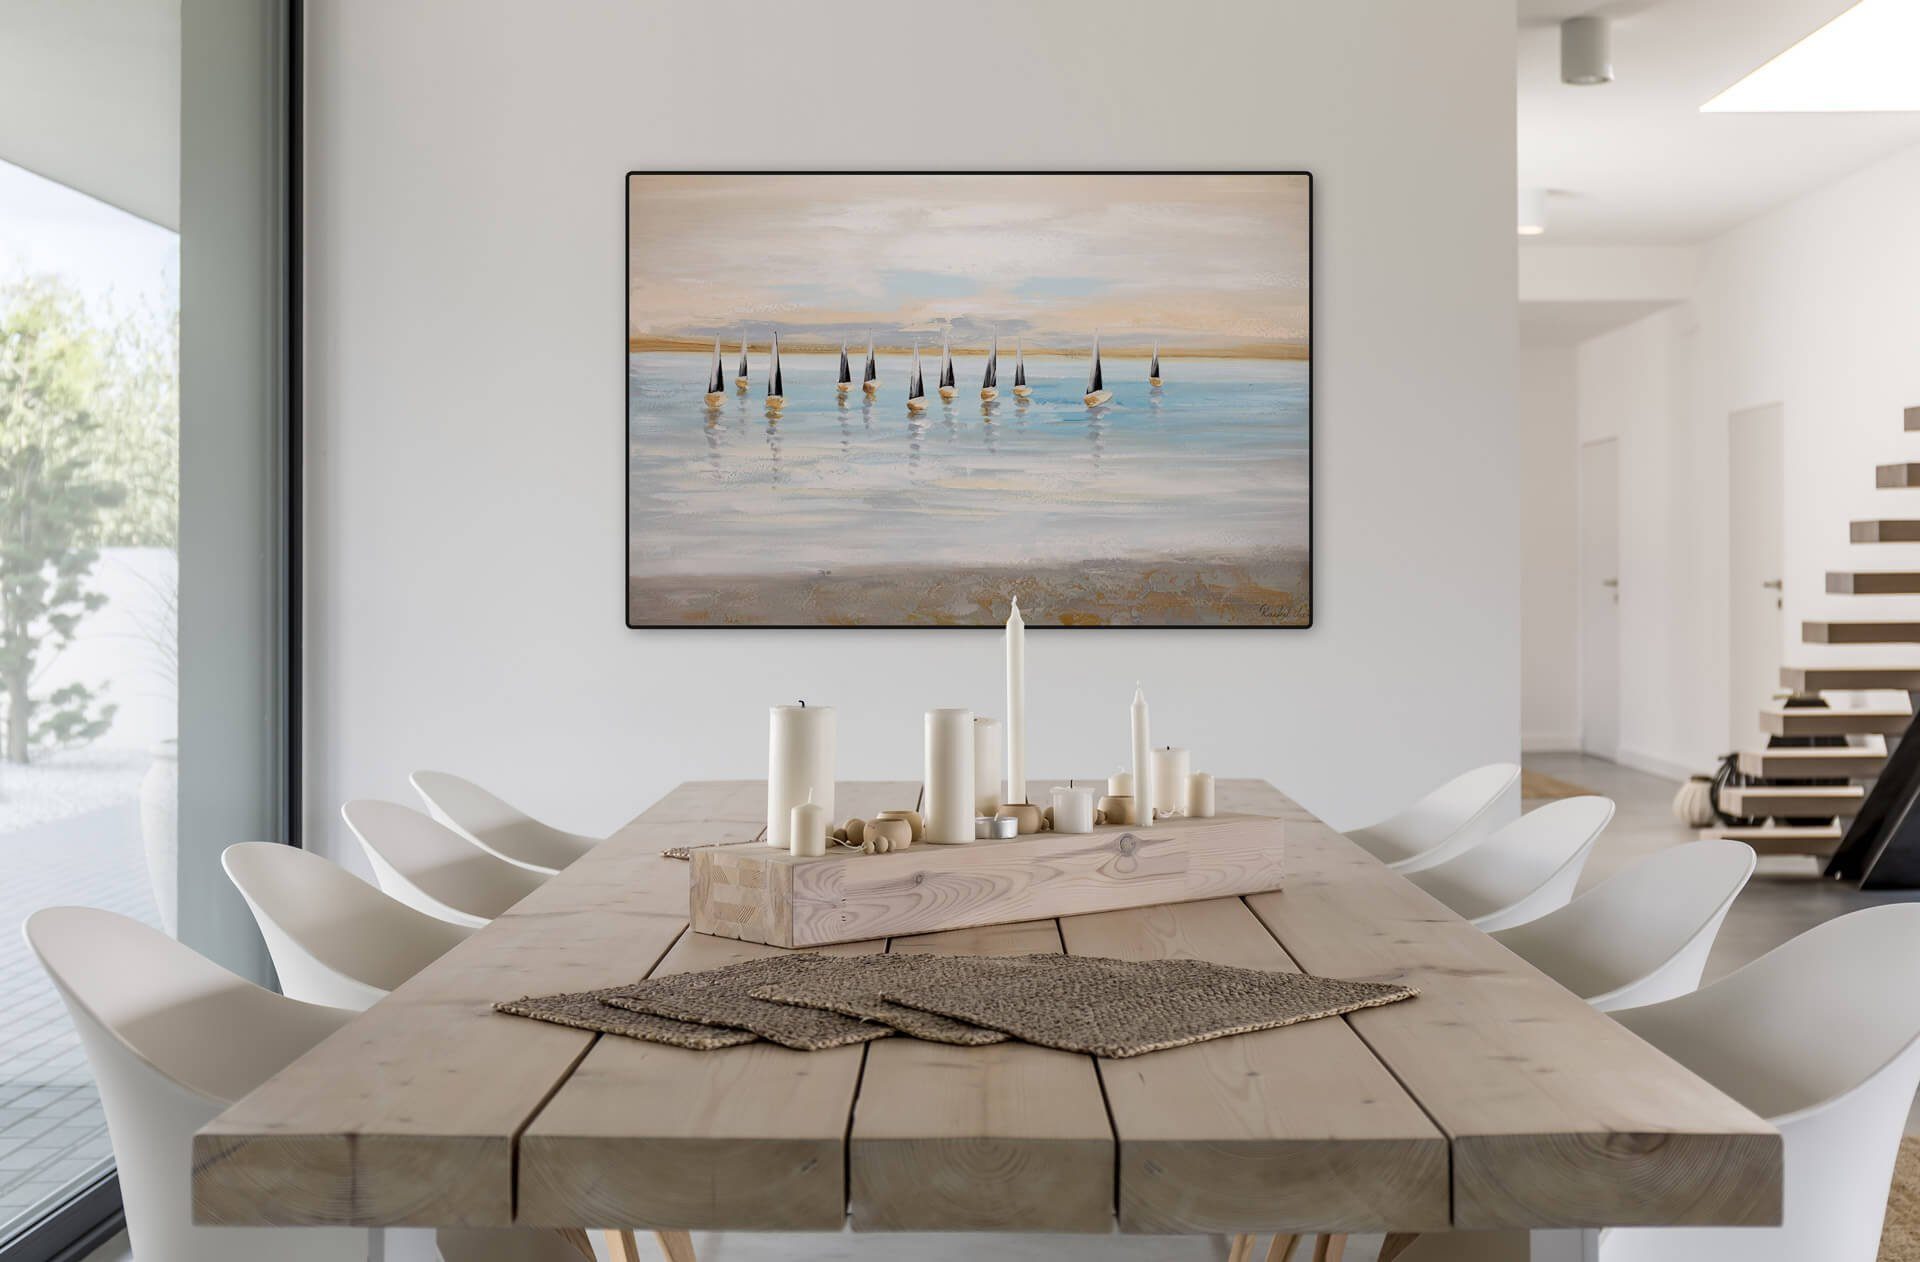 cm, 100% Meerpromenade Leinwandbild Gemälde Wohnzimmer 120x80 HANDGEMALT KUNSTLOFT Wandbild